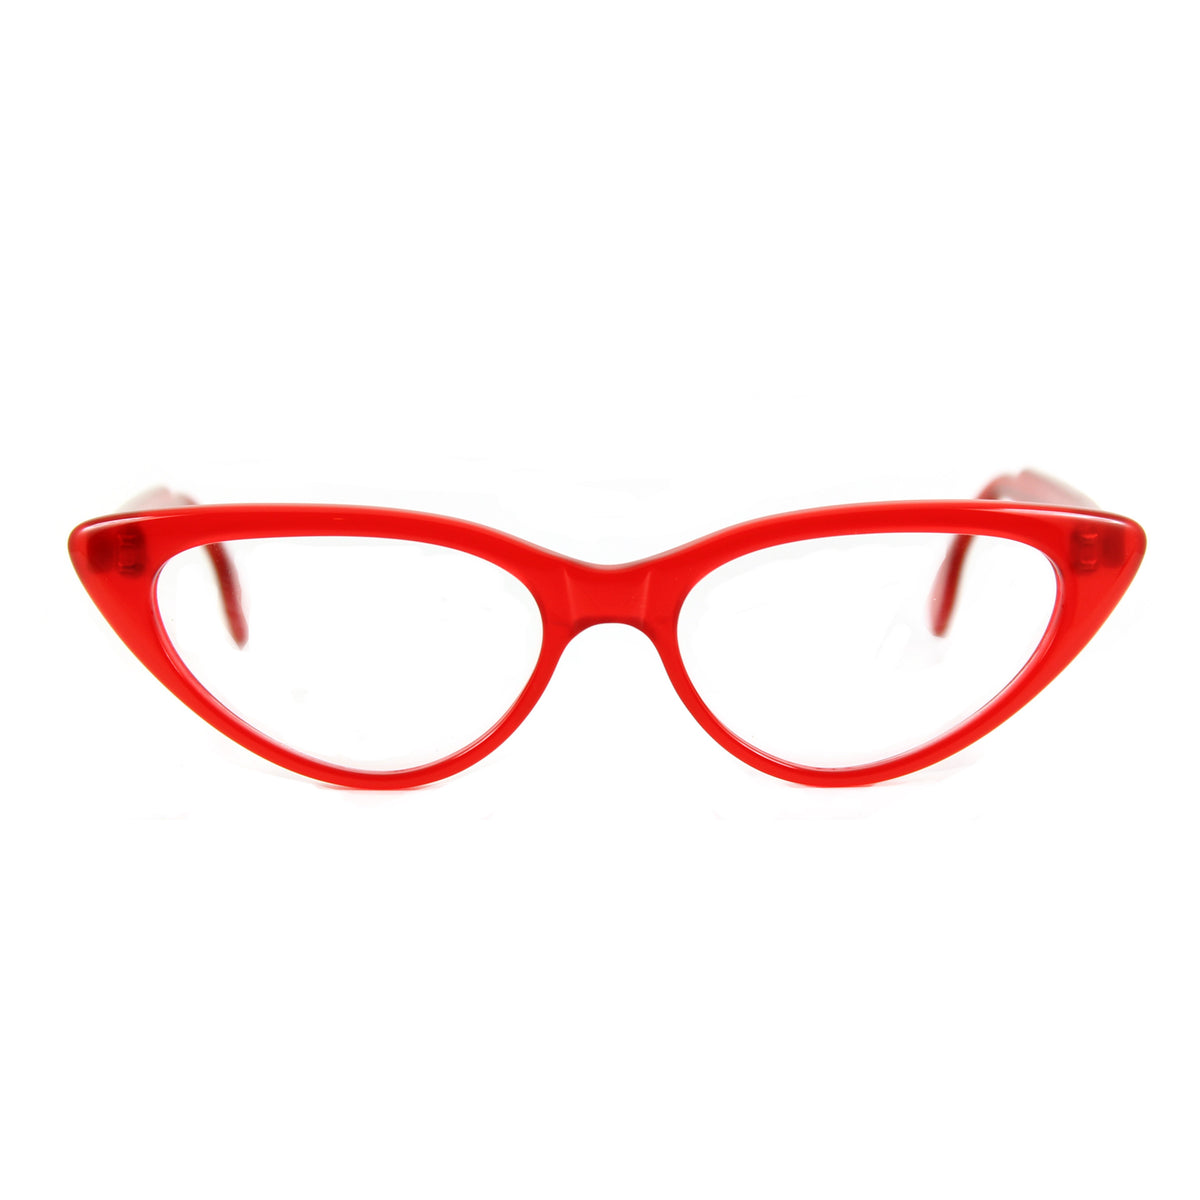 Bardot, 1950s retro style cat eye glasses, red– Retropeepers Ltd